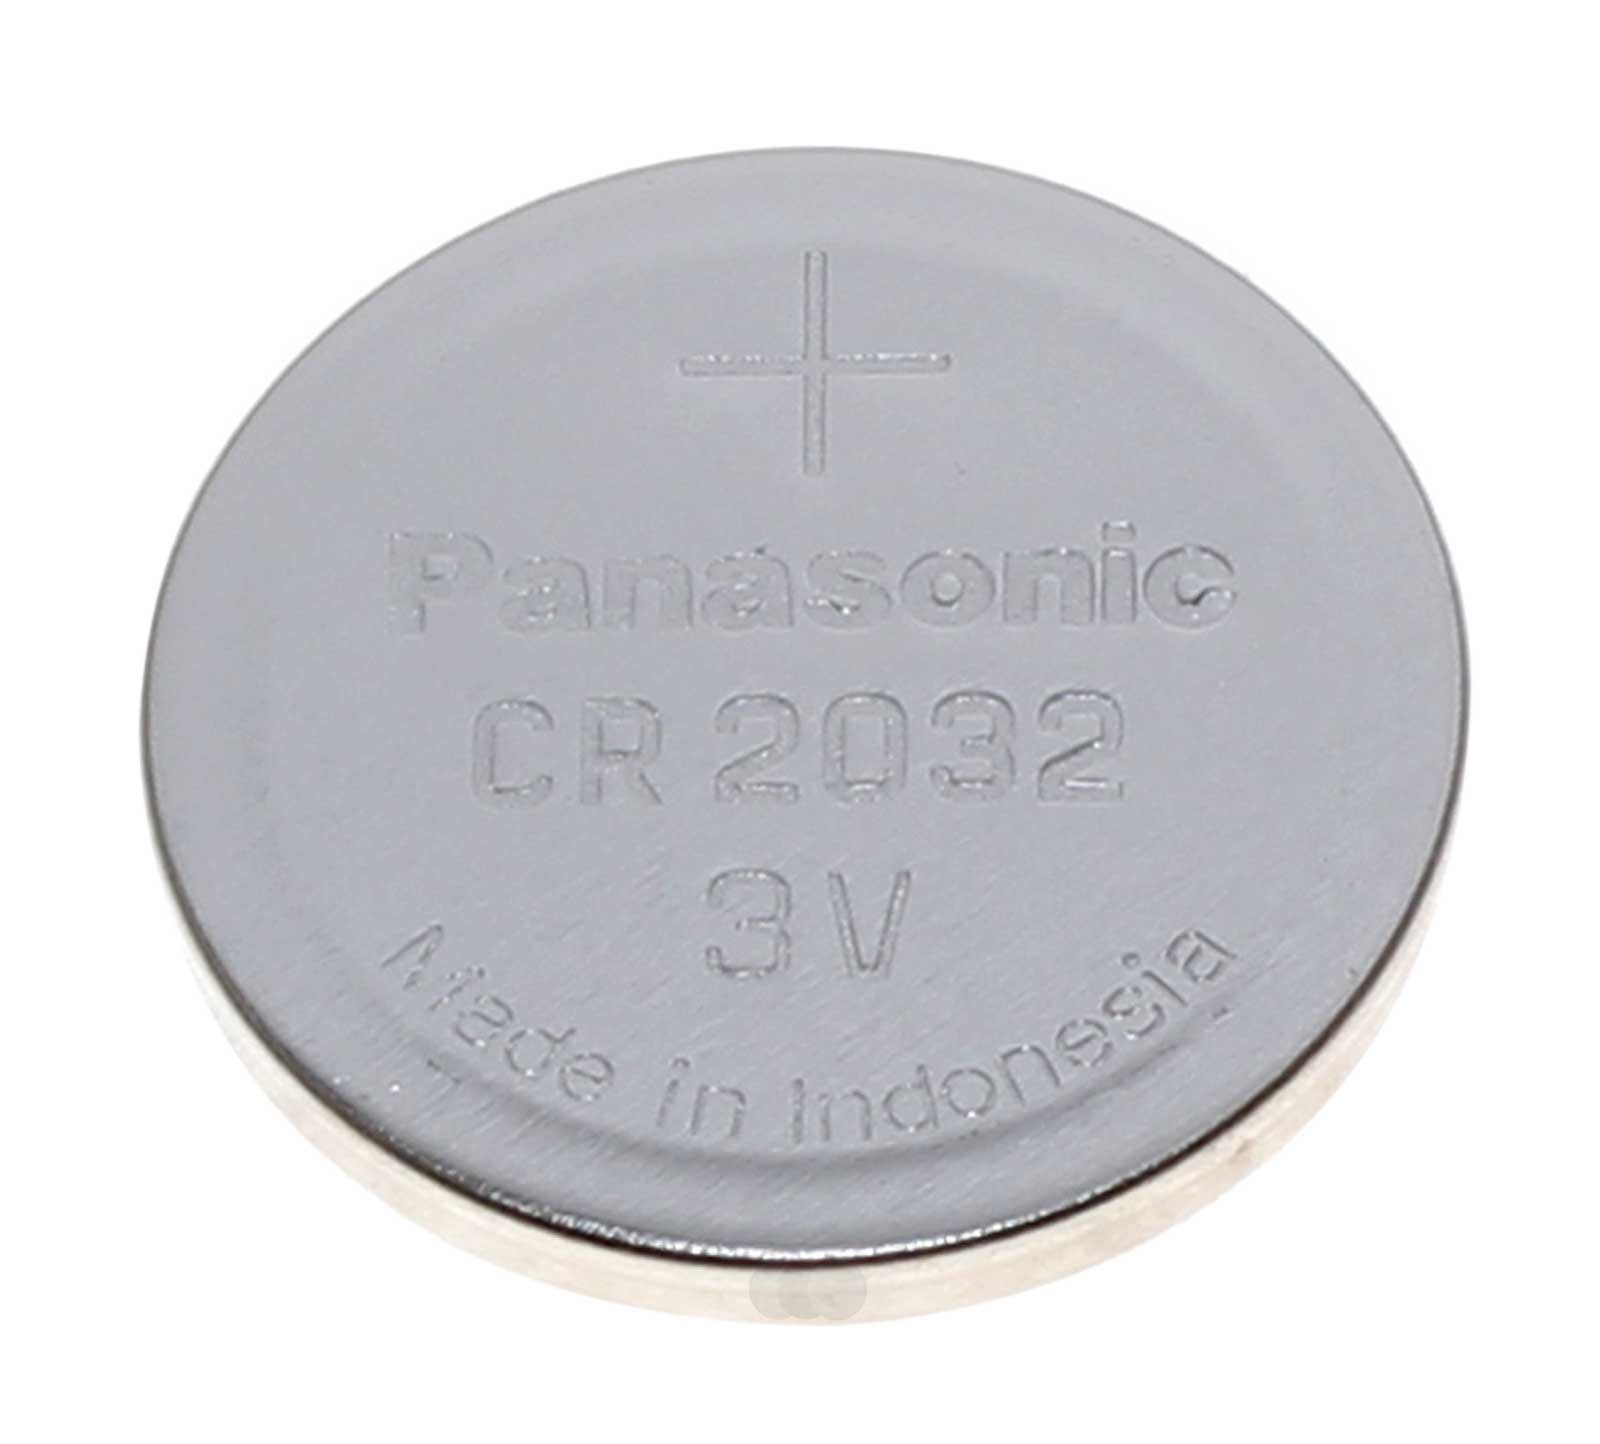 Batterie für VW Passat 3C Autoschlüssel Funksender Panasonic CR2032 Lithium Knopfzelle, 3V, 220mAh